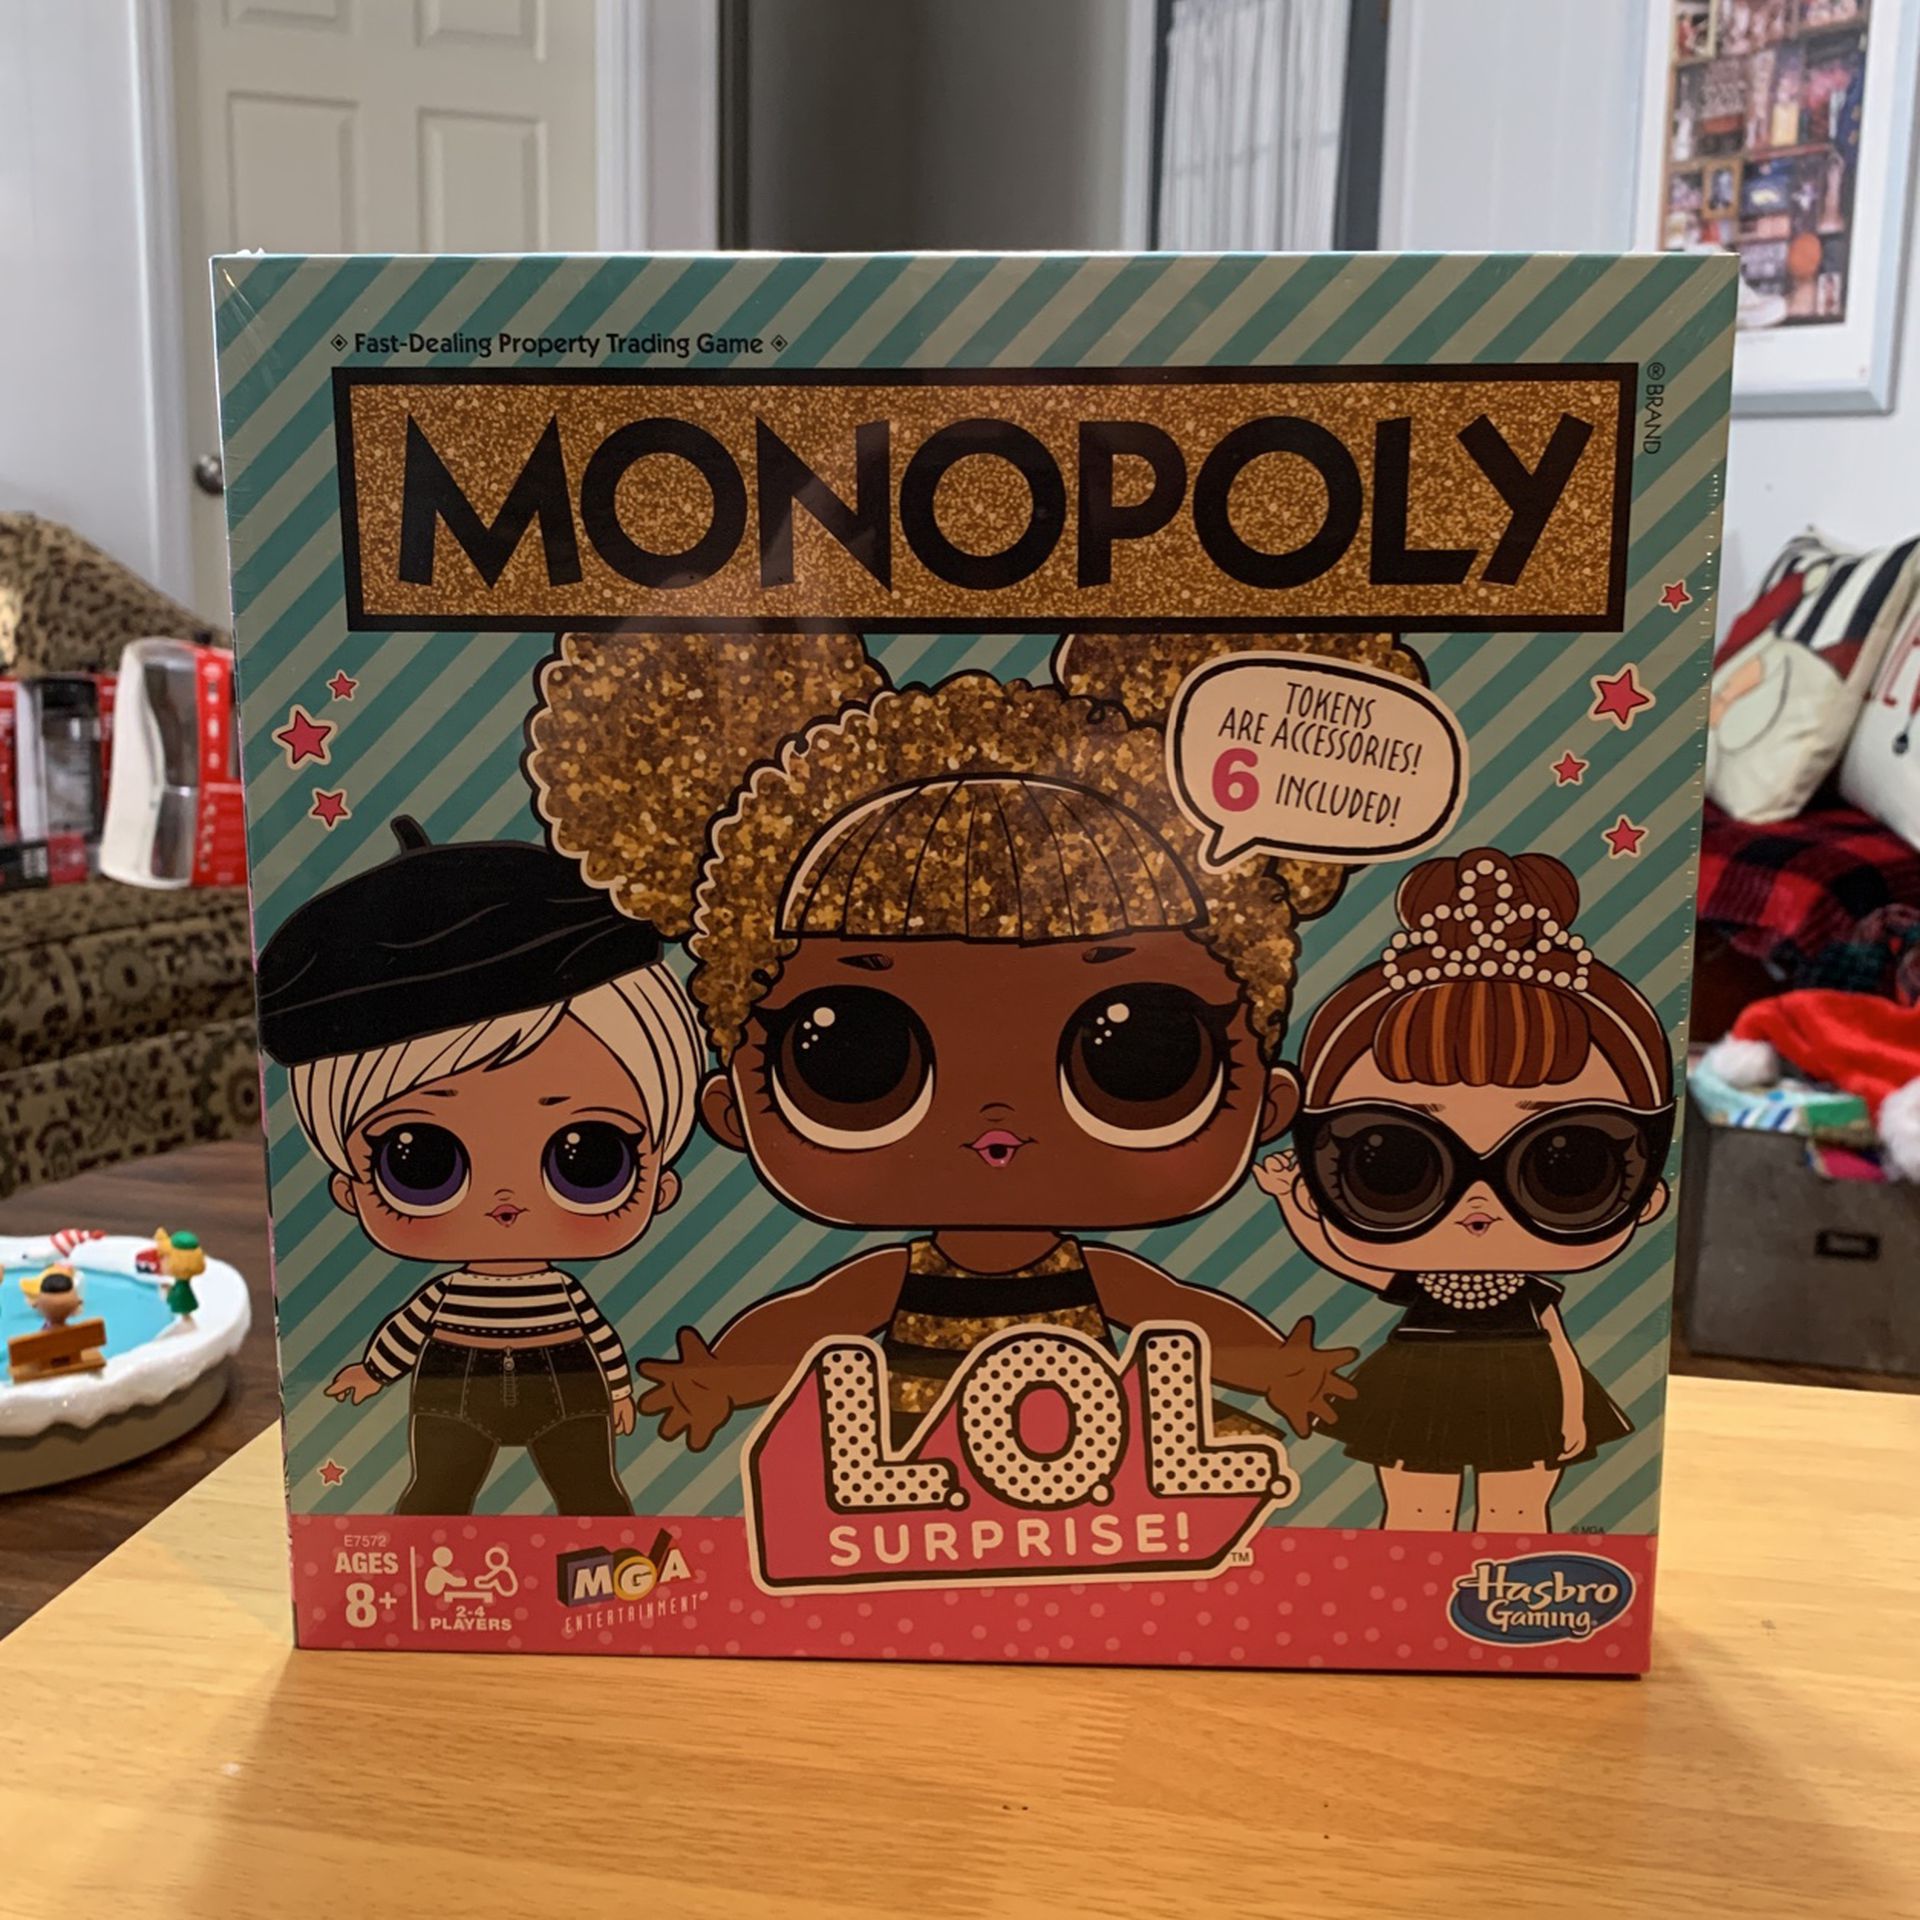 LOL Surprise monopoly game 